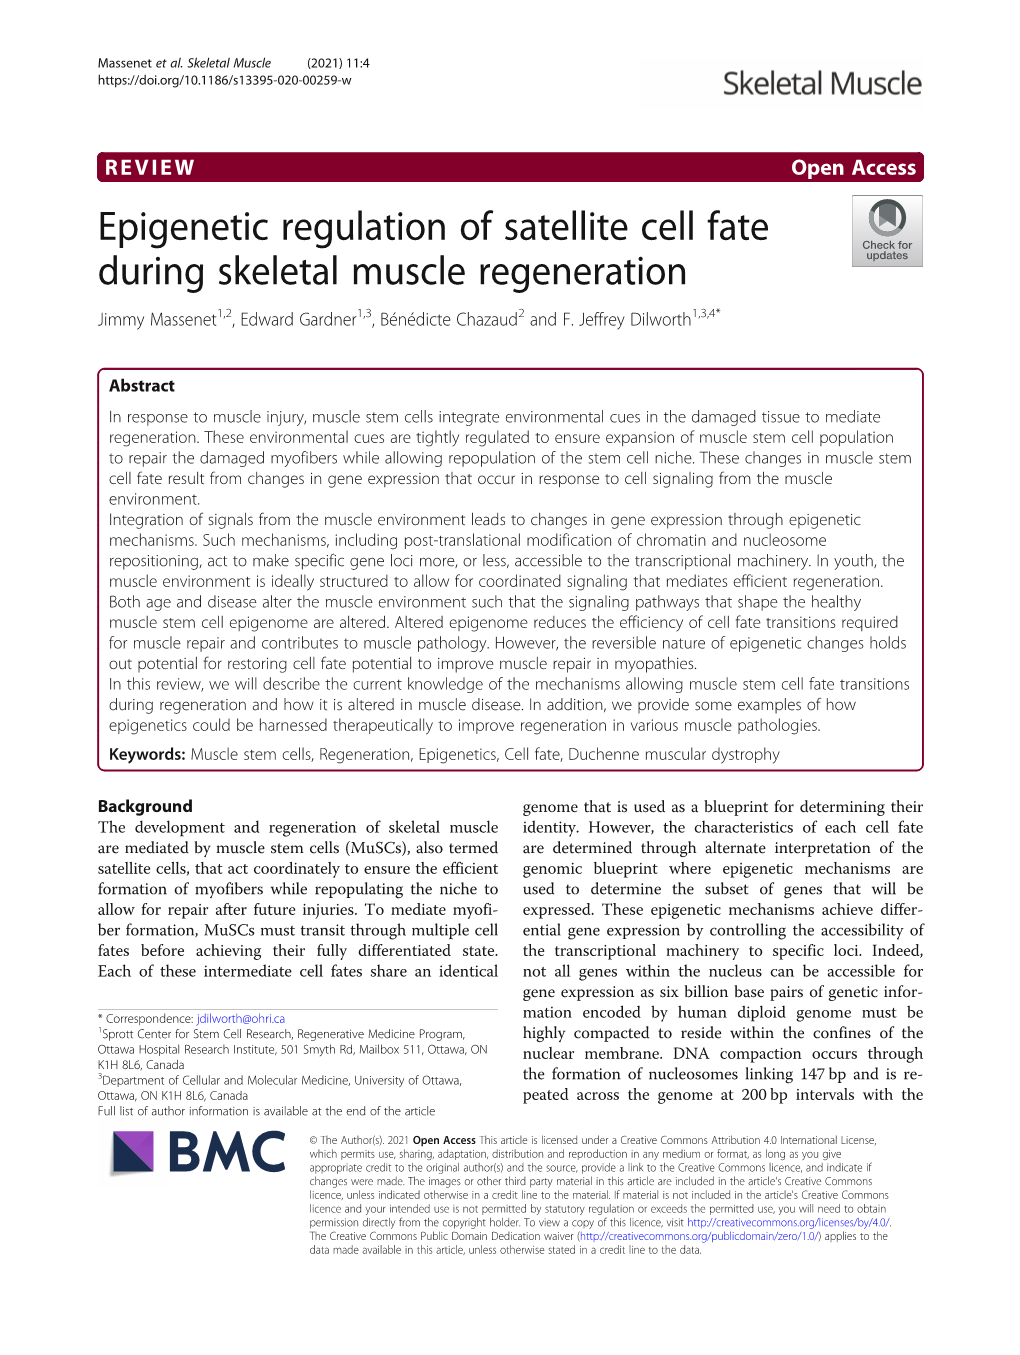 Epigenetic Regulation of Satellite Cell Fate During Skeletal Muscle Regeneration Jimmy Massenet1,2, Edward Gardner1,3, Bénédicte Chazaud2 and F